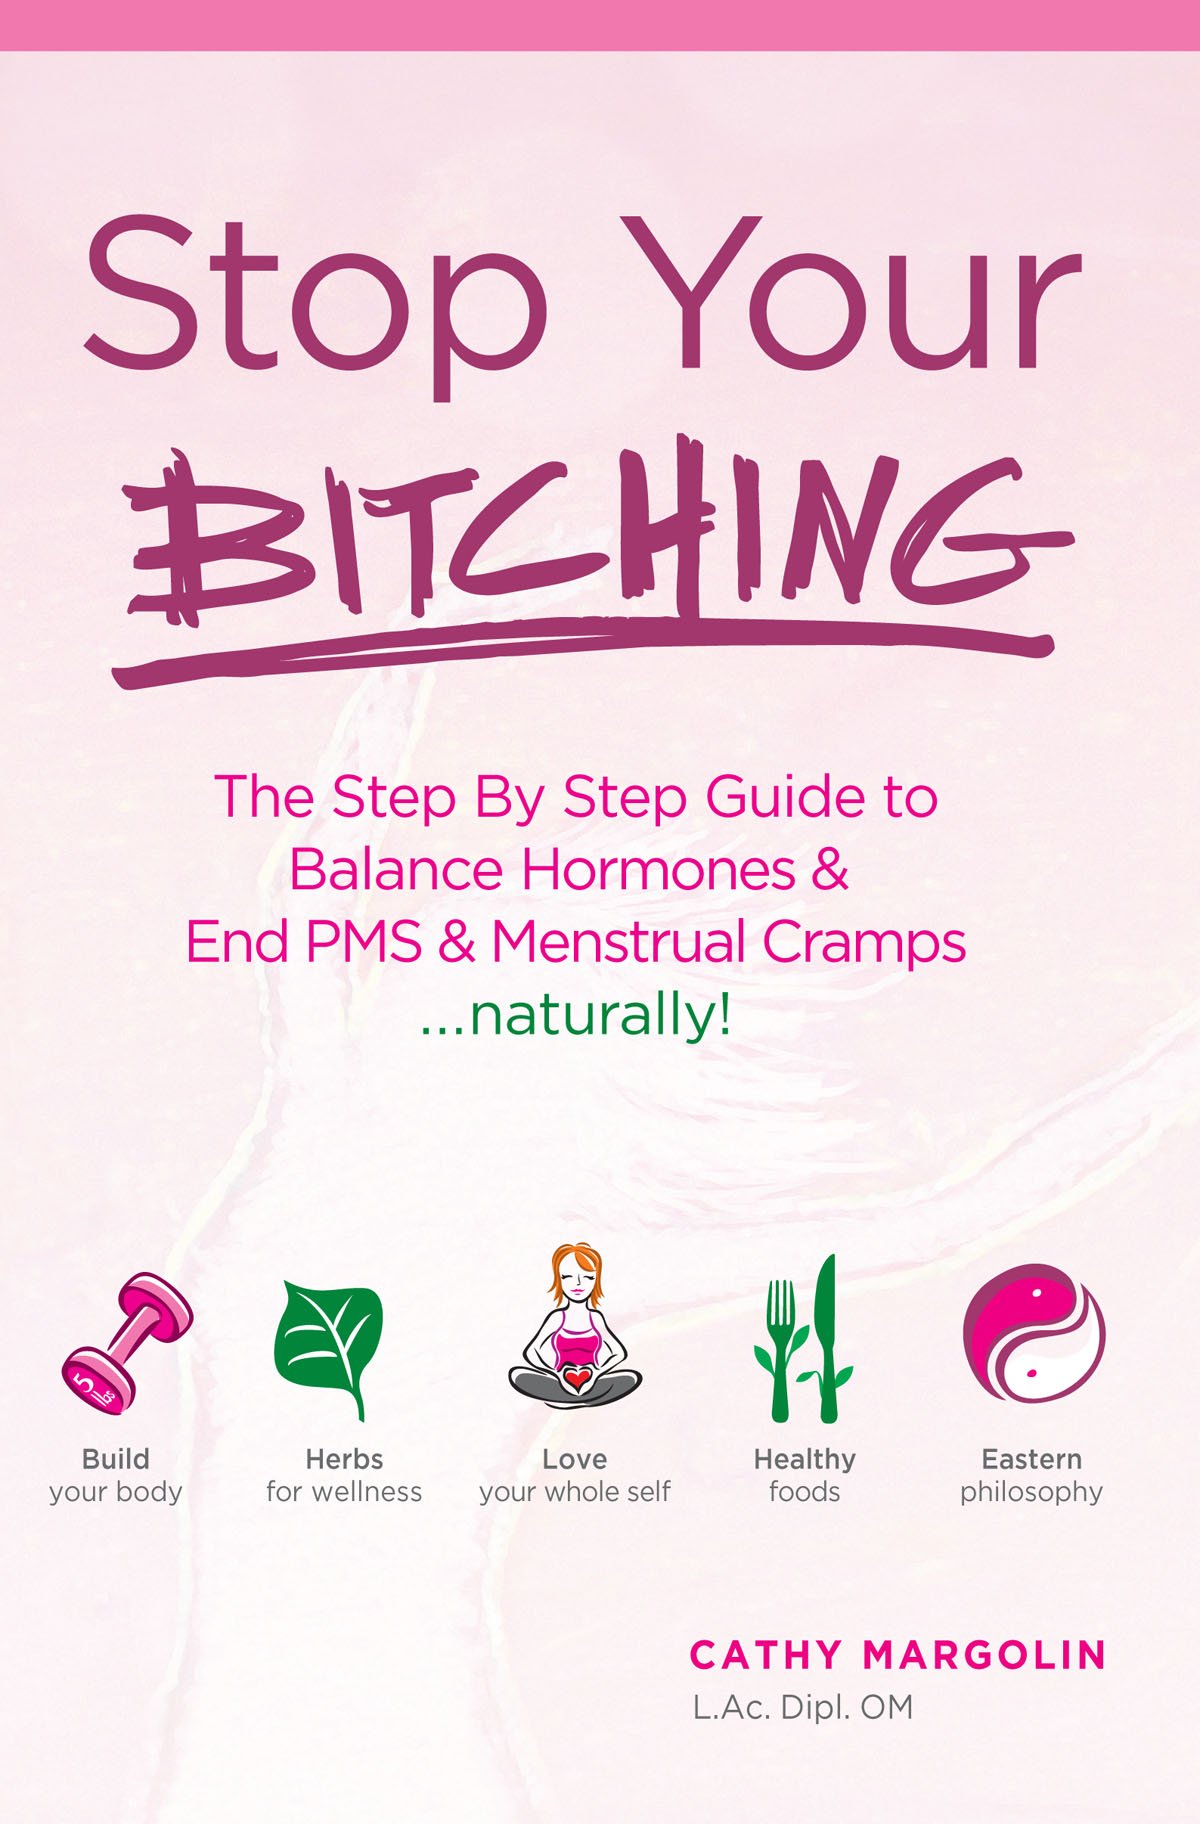 âStop Your Bitchingâ? by Cathy Margolin Demystifies PMS ...